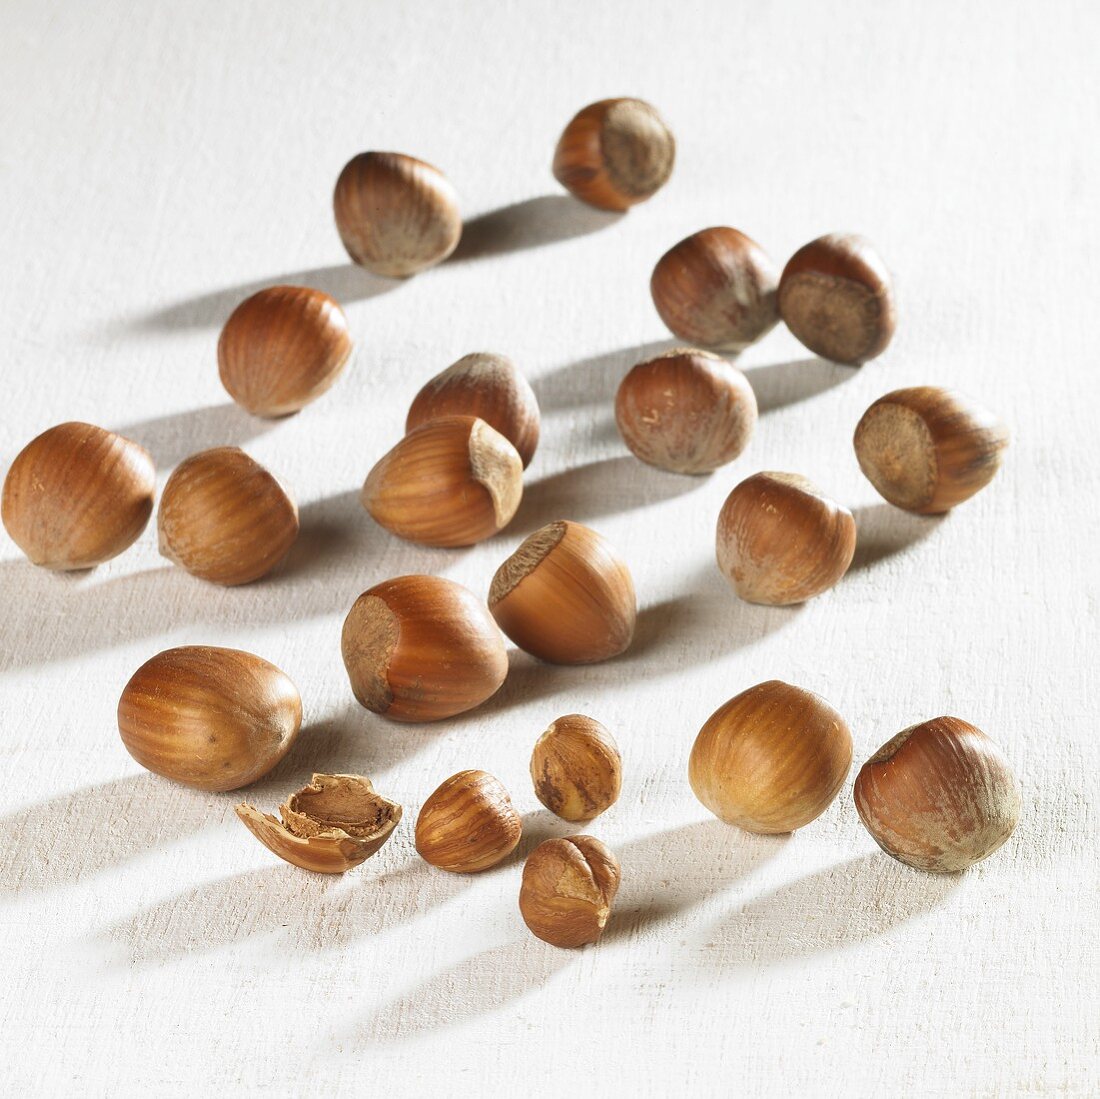 Hazelnuts, shelled and unshelled